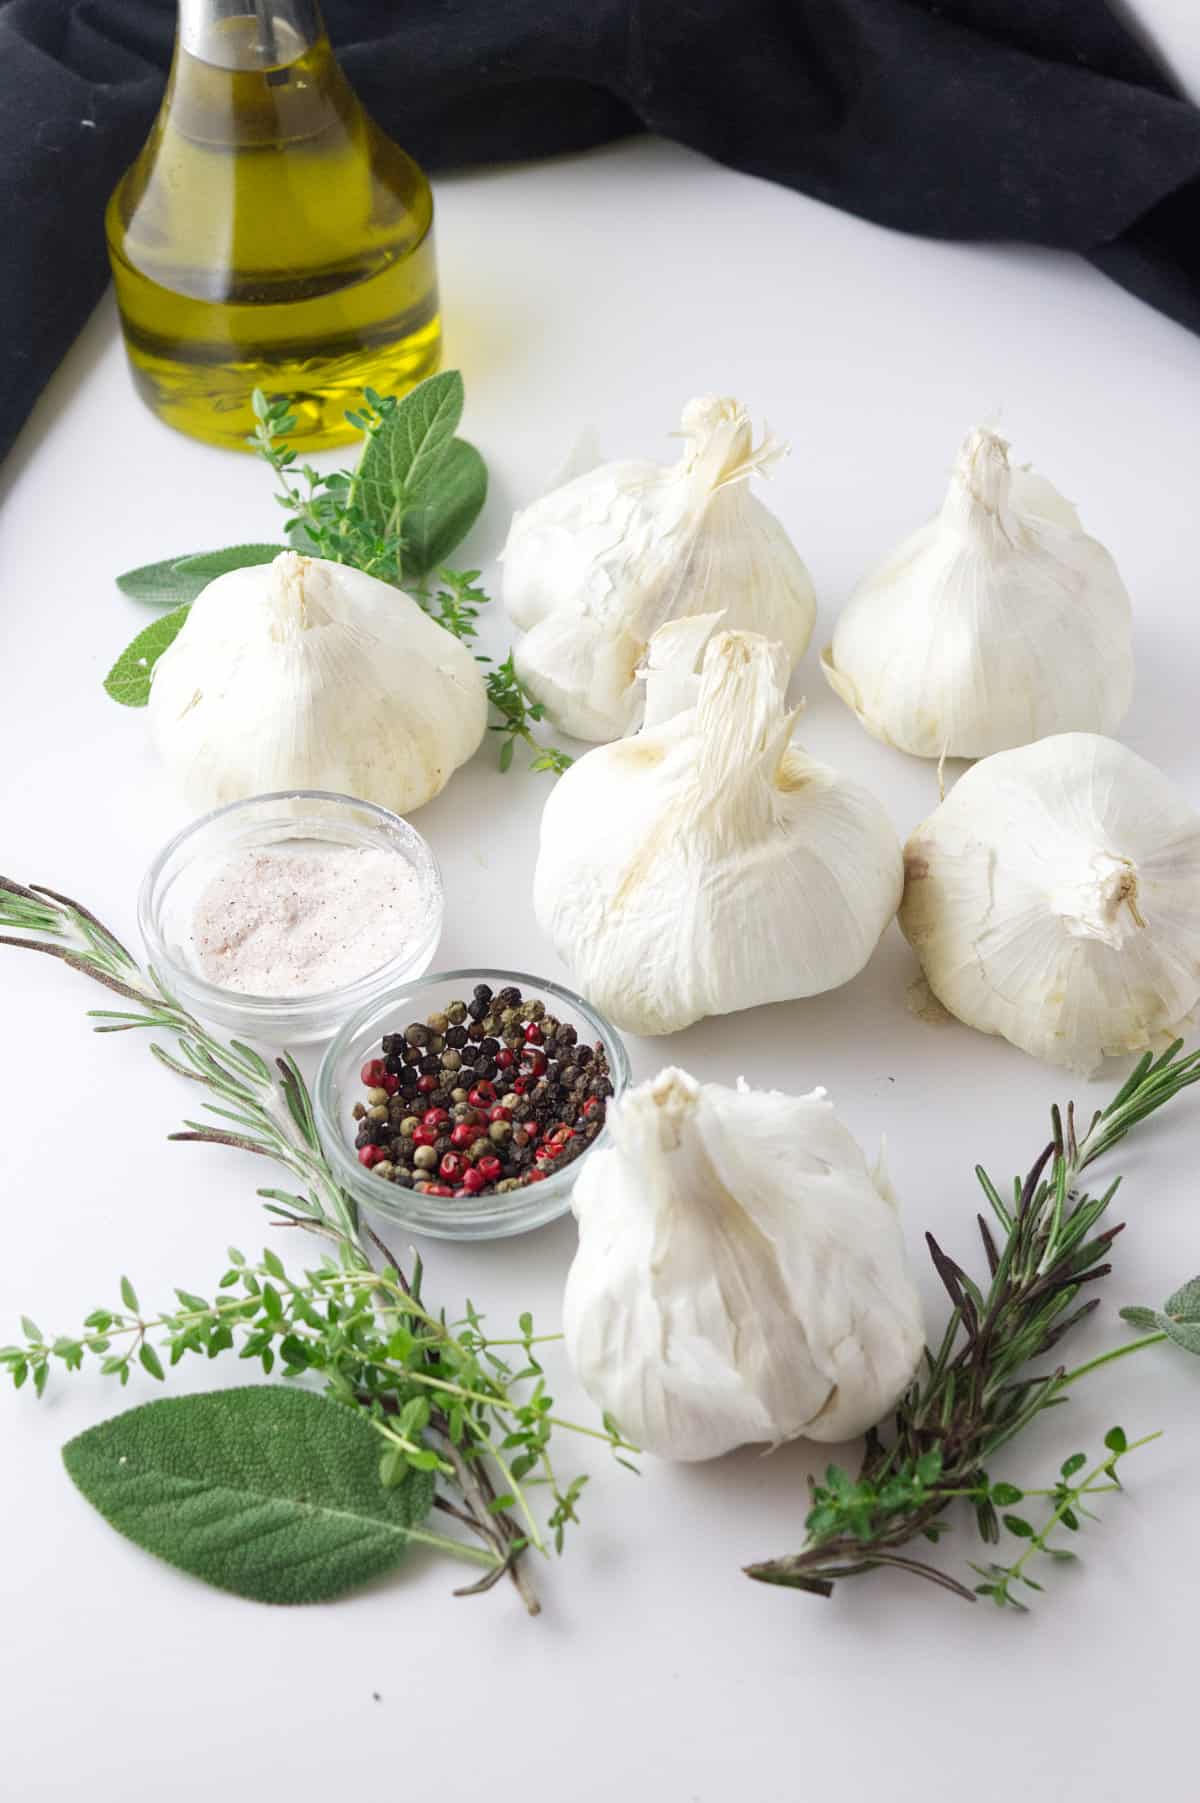 ingredients for roasting cloves of garlic.